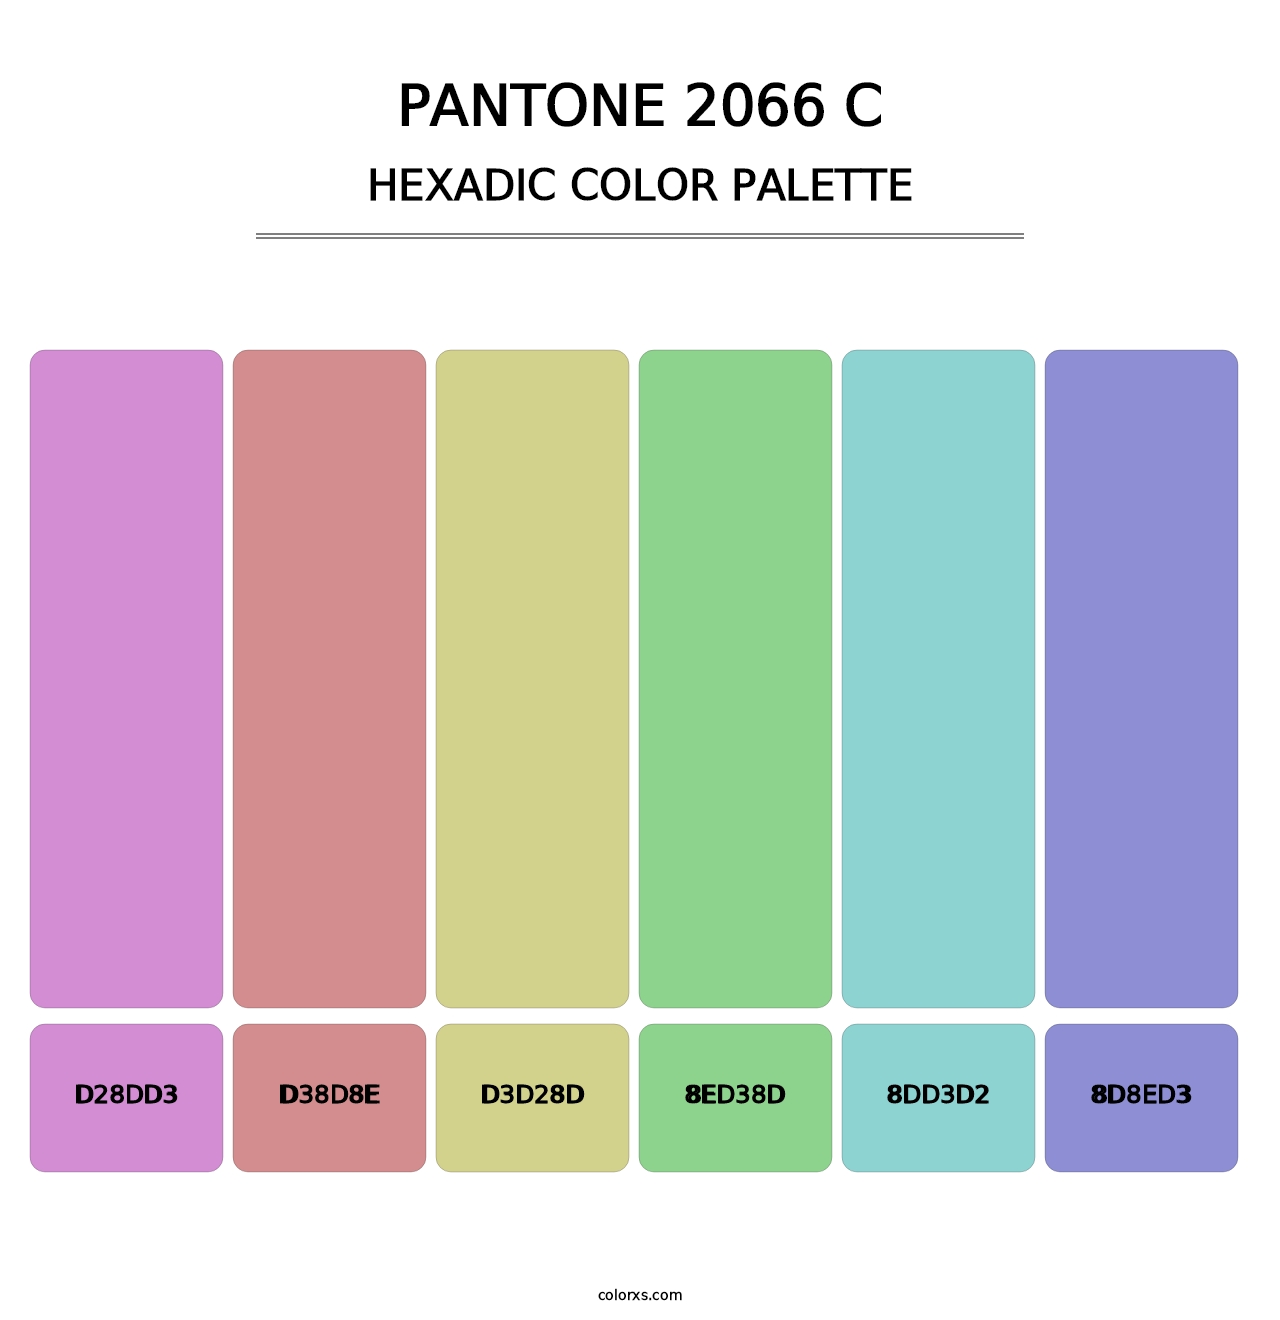 PANTONE 2066 C - Hexadic Color Palette